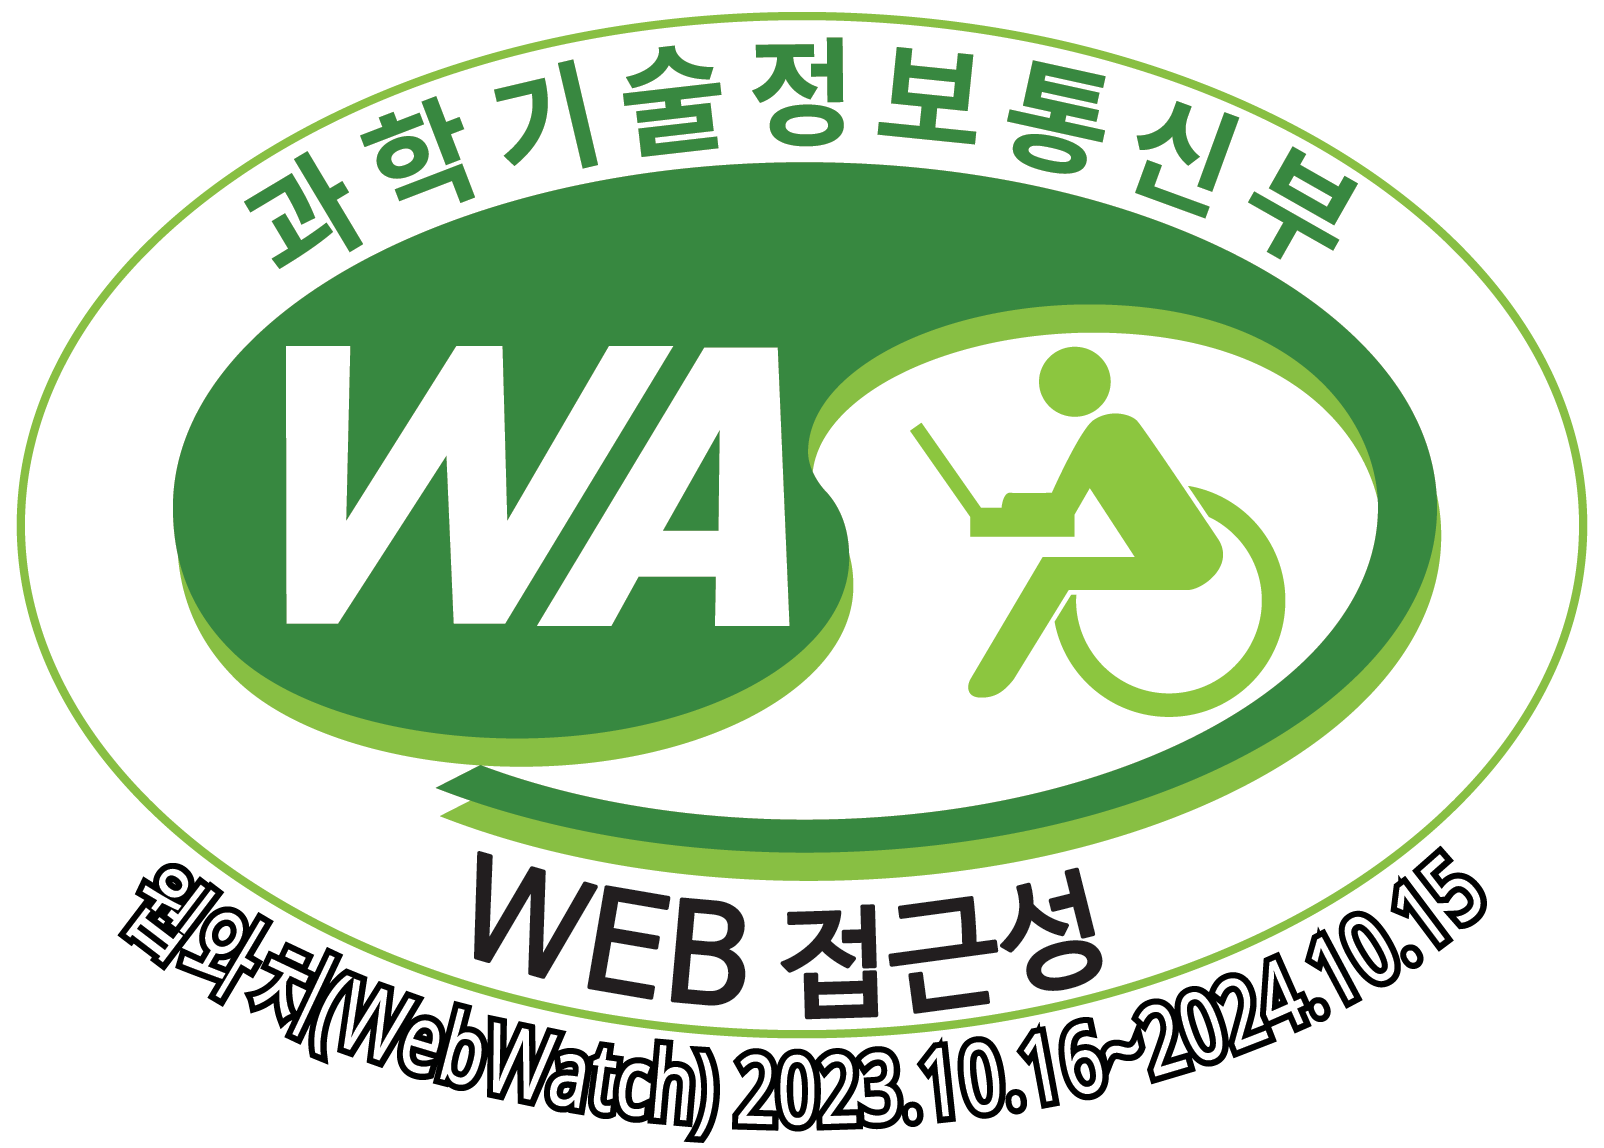 WA 인증마크, 웹와치(WebWatch) 2023.10.16 ~ 2024.10.15